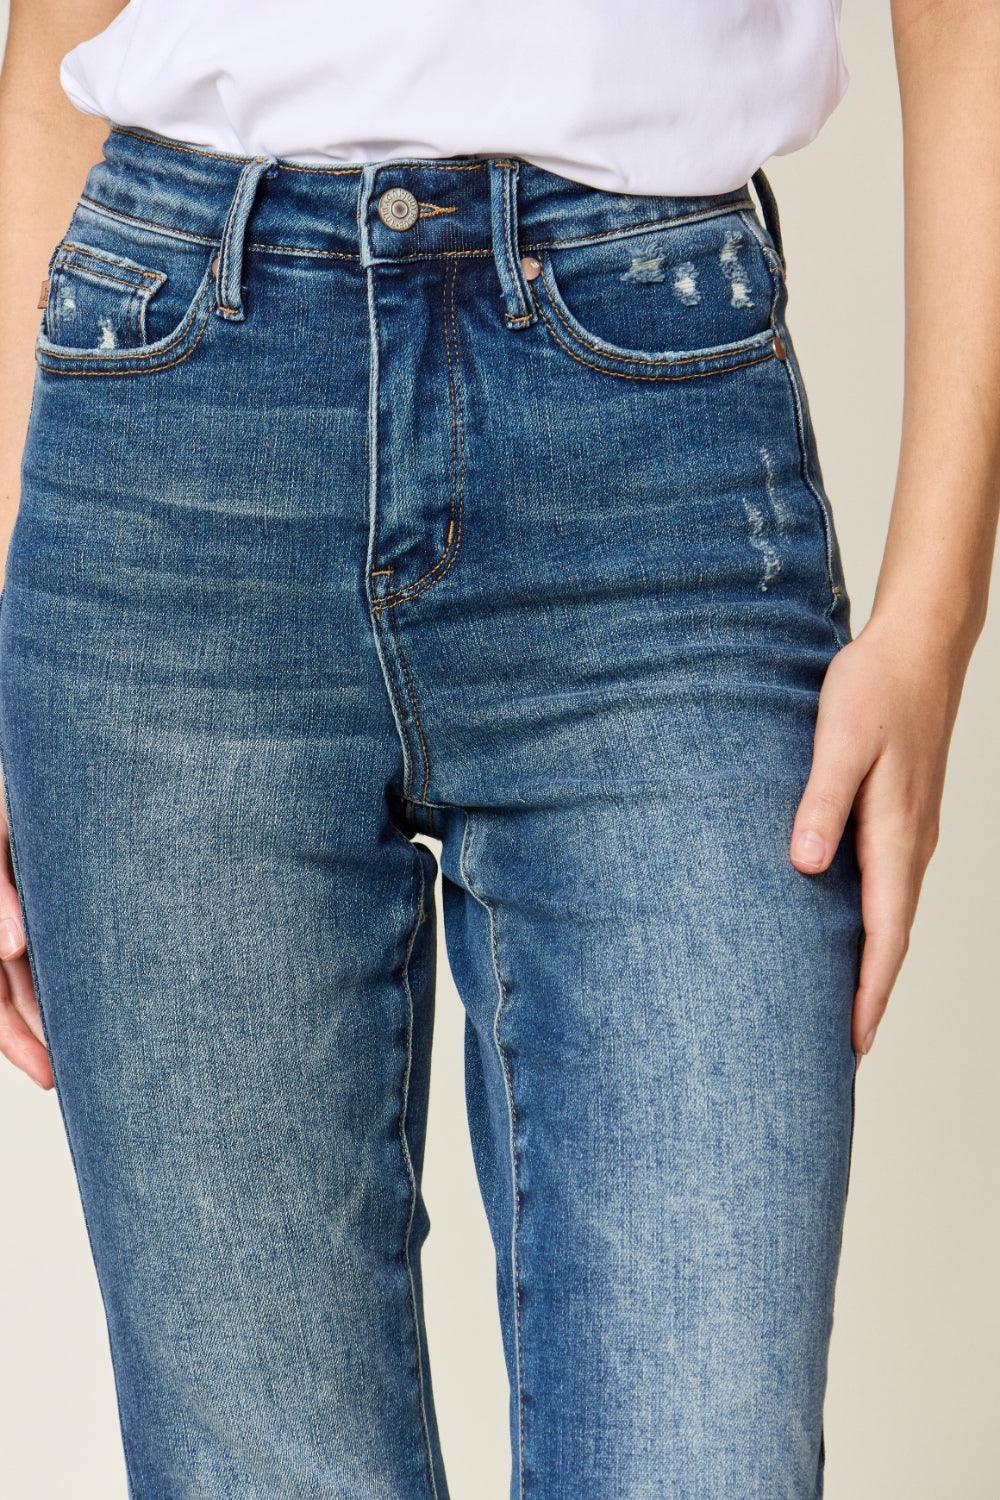 Judy Blue Tummy Control High Waist Slim Jeans - Jessiz Boutique